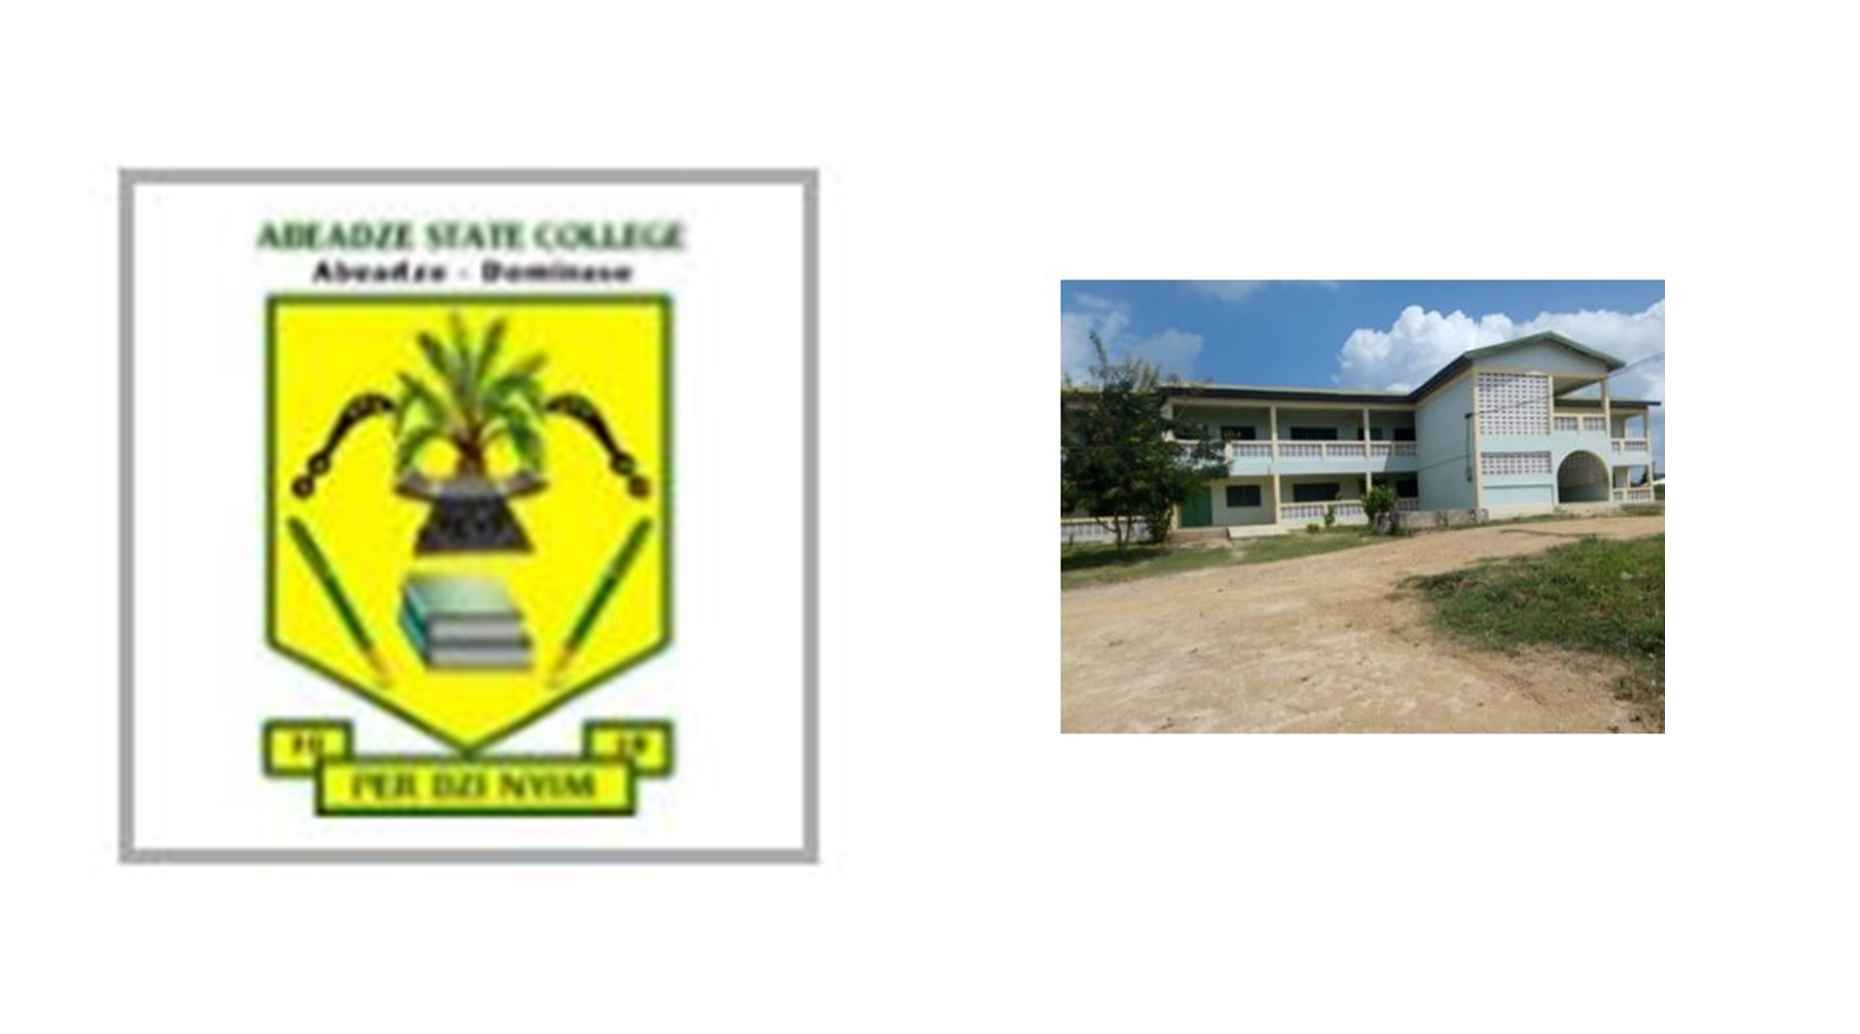 Abeadze State College